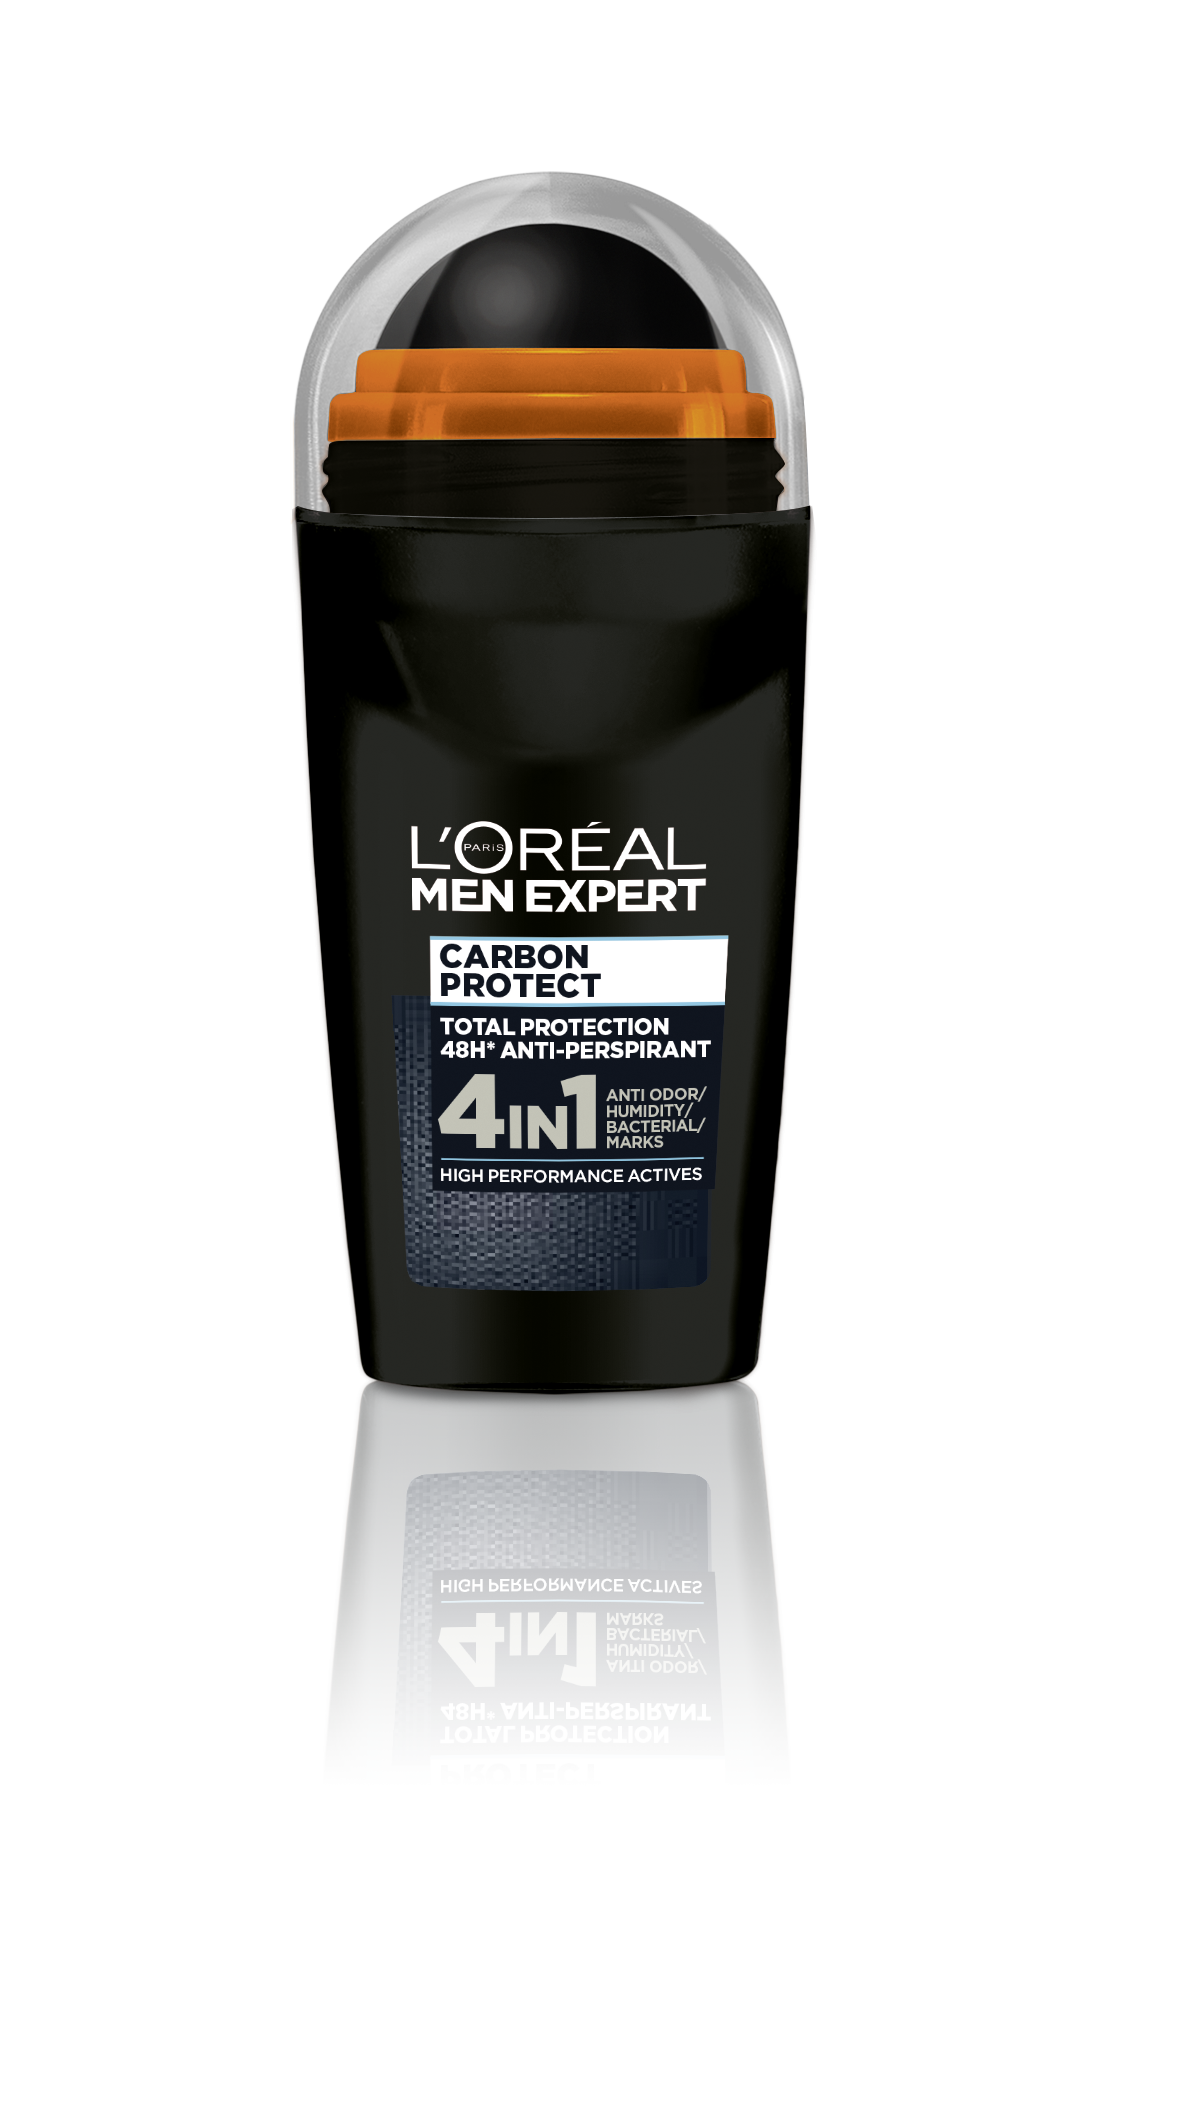 L'Oréal Men Expert Deodorant Men Expert Carbon Protect 4 in 1 - 50ml - Deodorant Roller